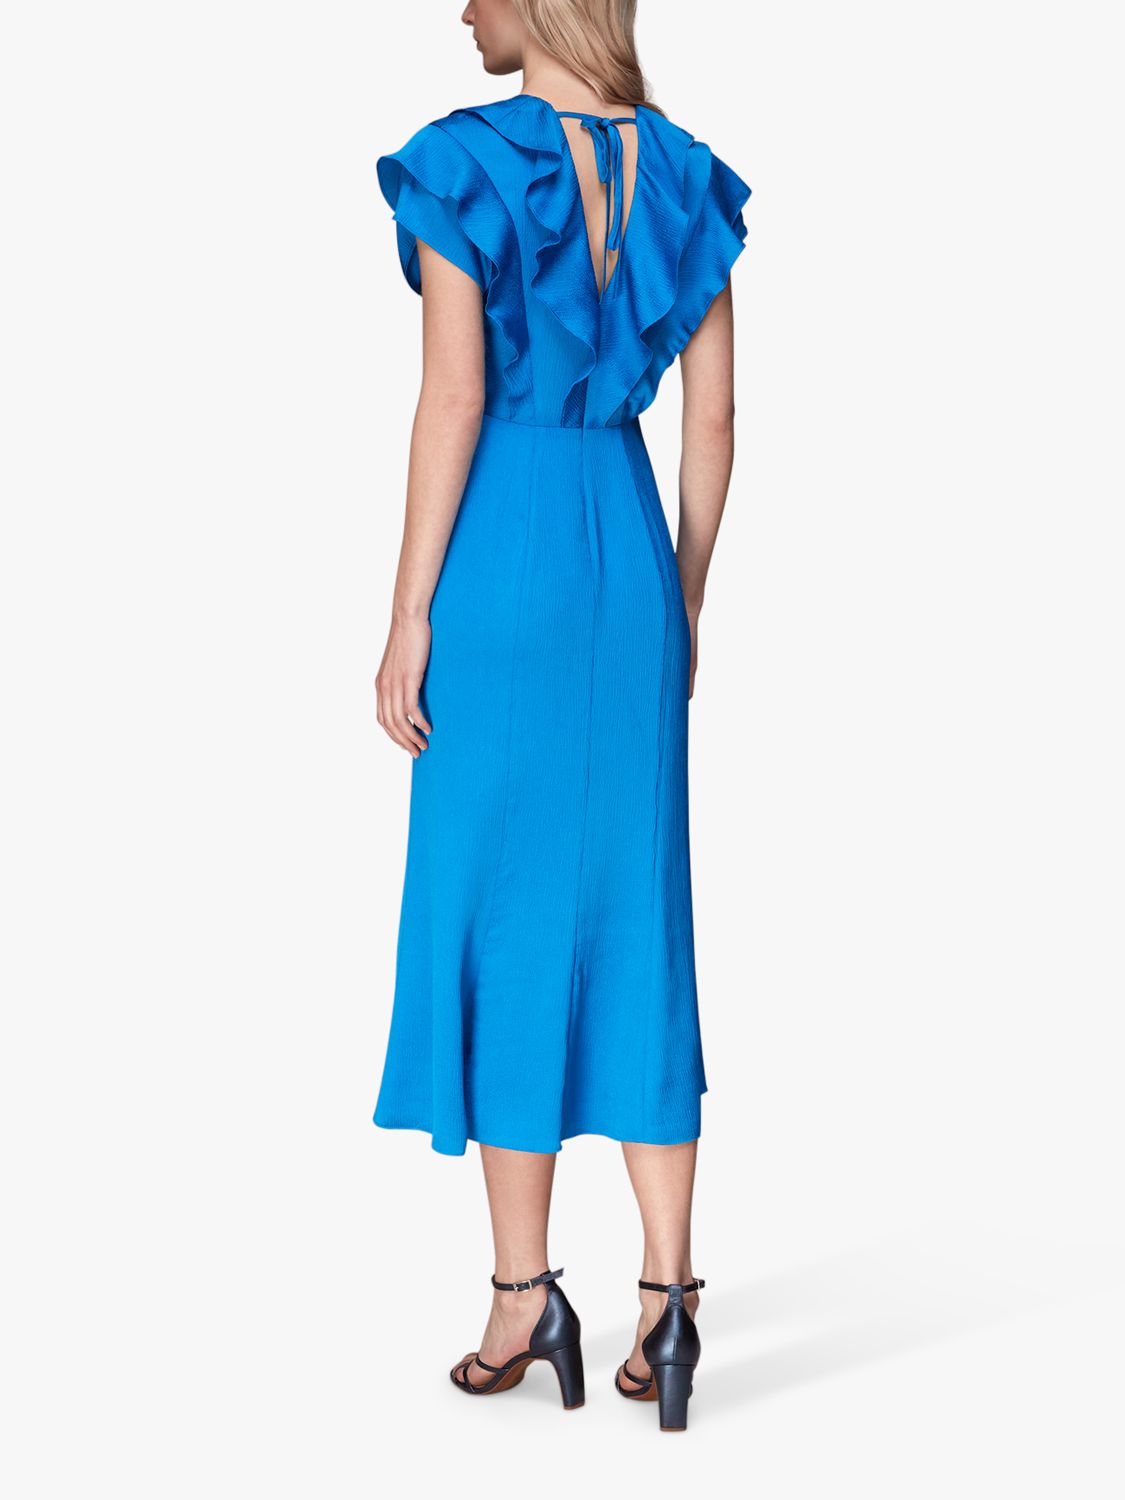 Whistles Adeline Frill Midi Dress, Bright Blue at John Lewis & Partners